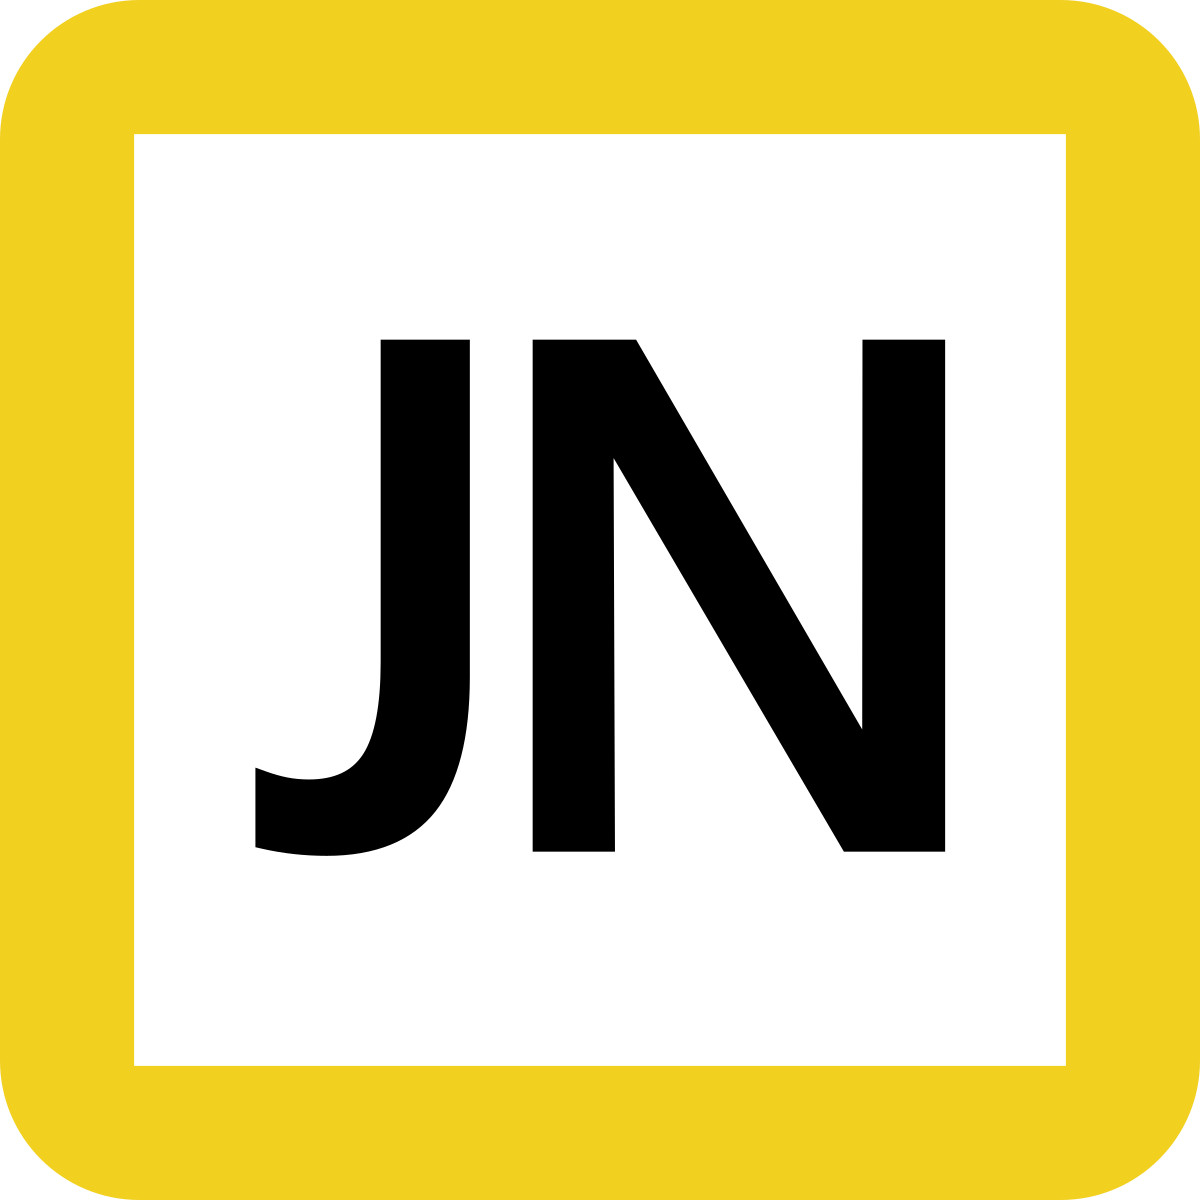 File:JR JJ line symbol.svg - Wikimedia Commons